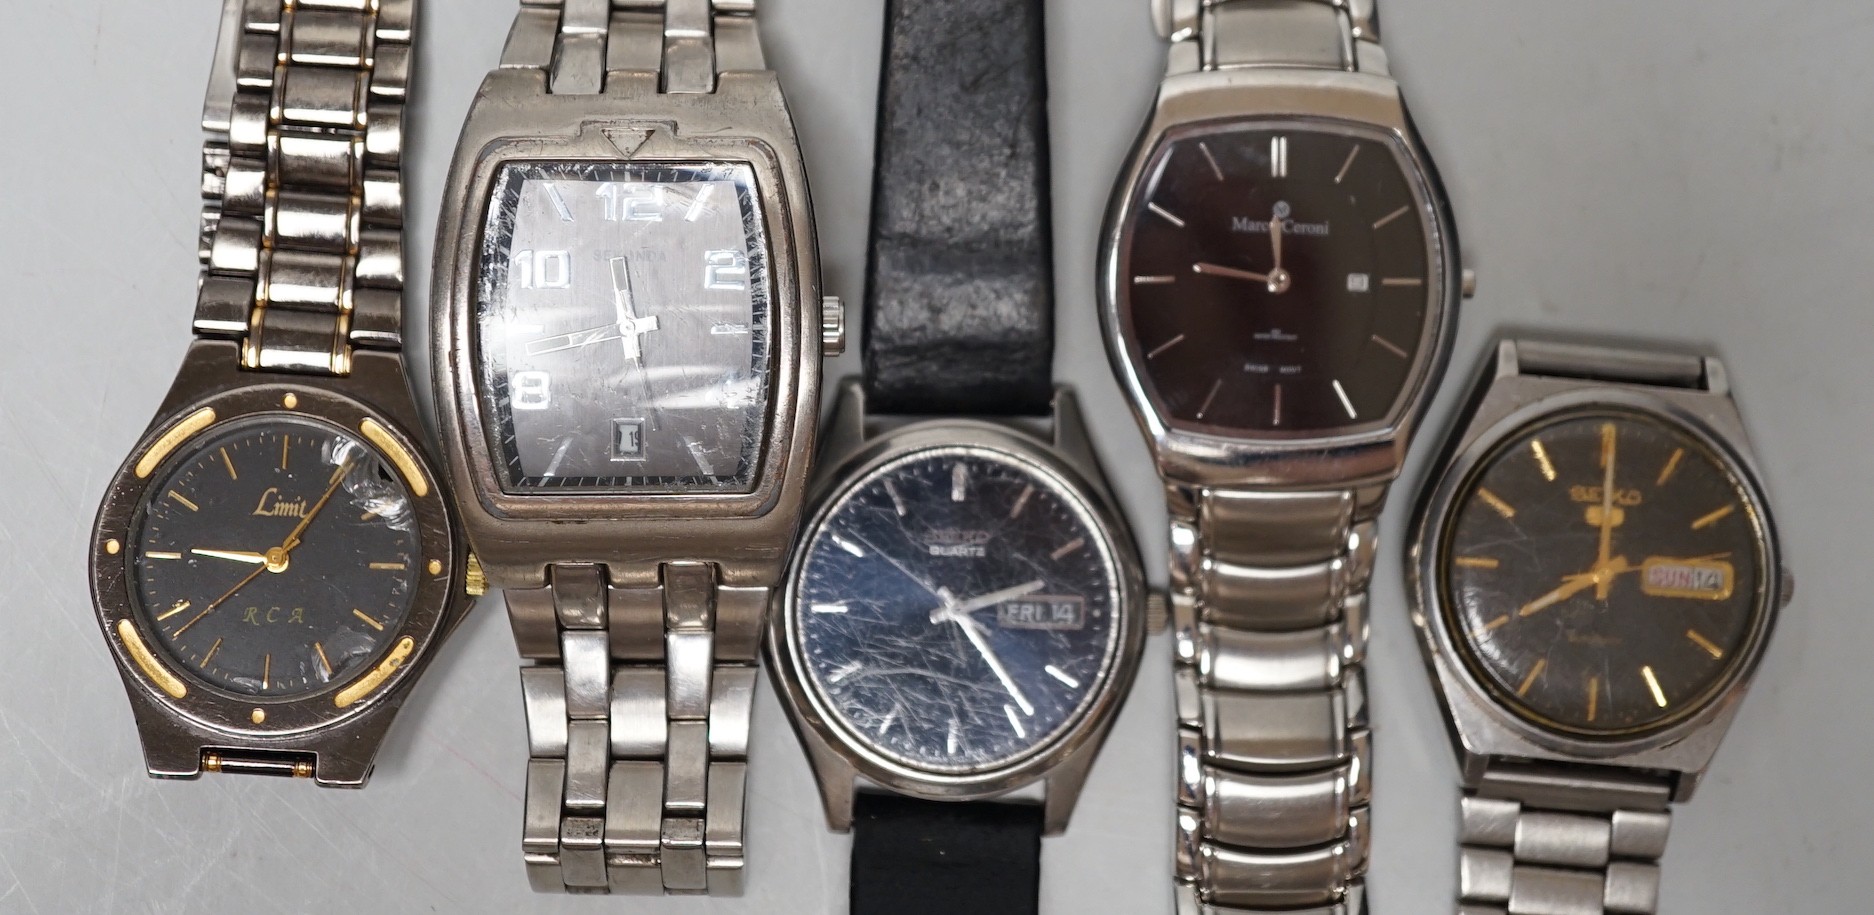 Five assorted modern gentleman's steel wrist watches, including Seiko, Sekonda and Limit.                                                                                                                                   